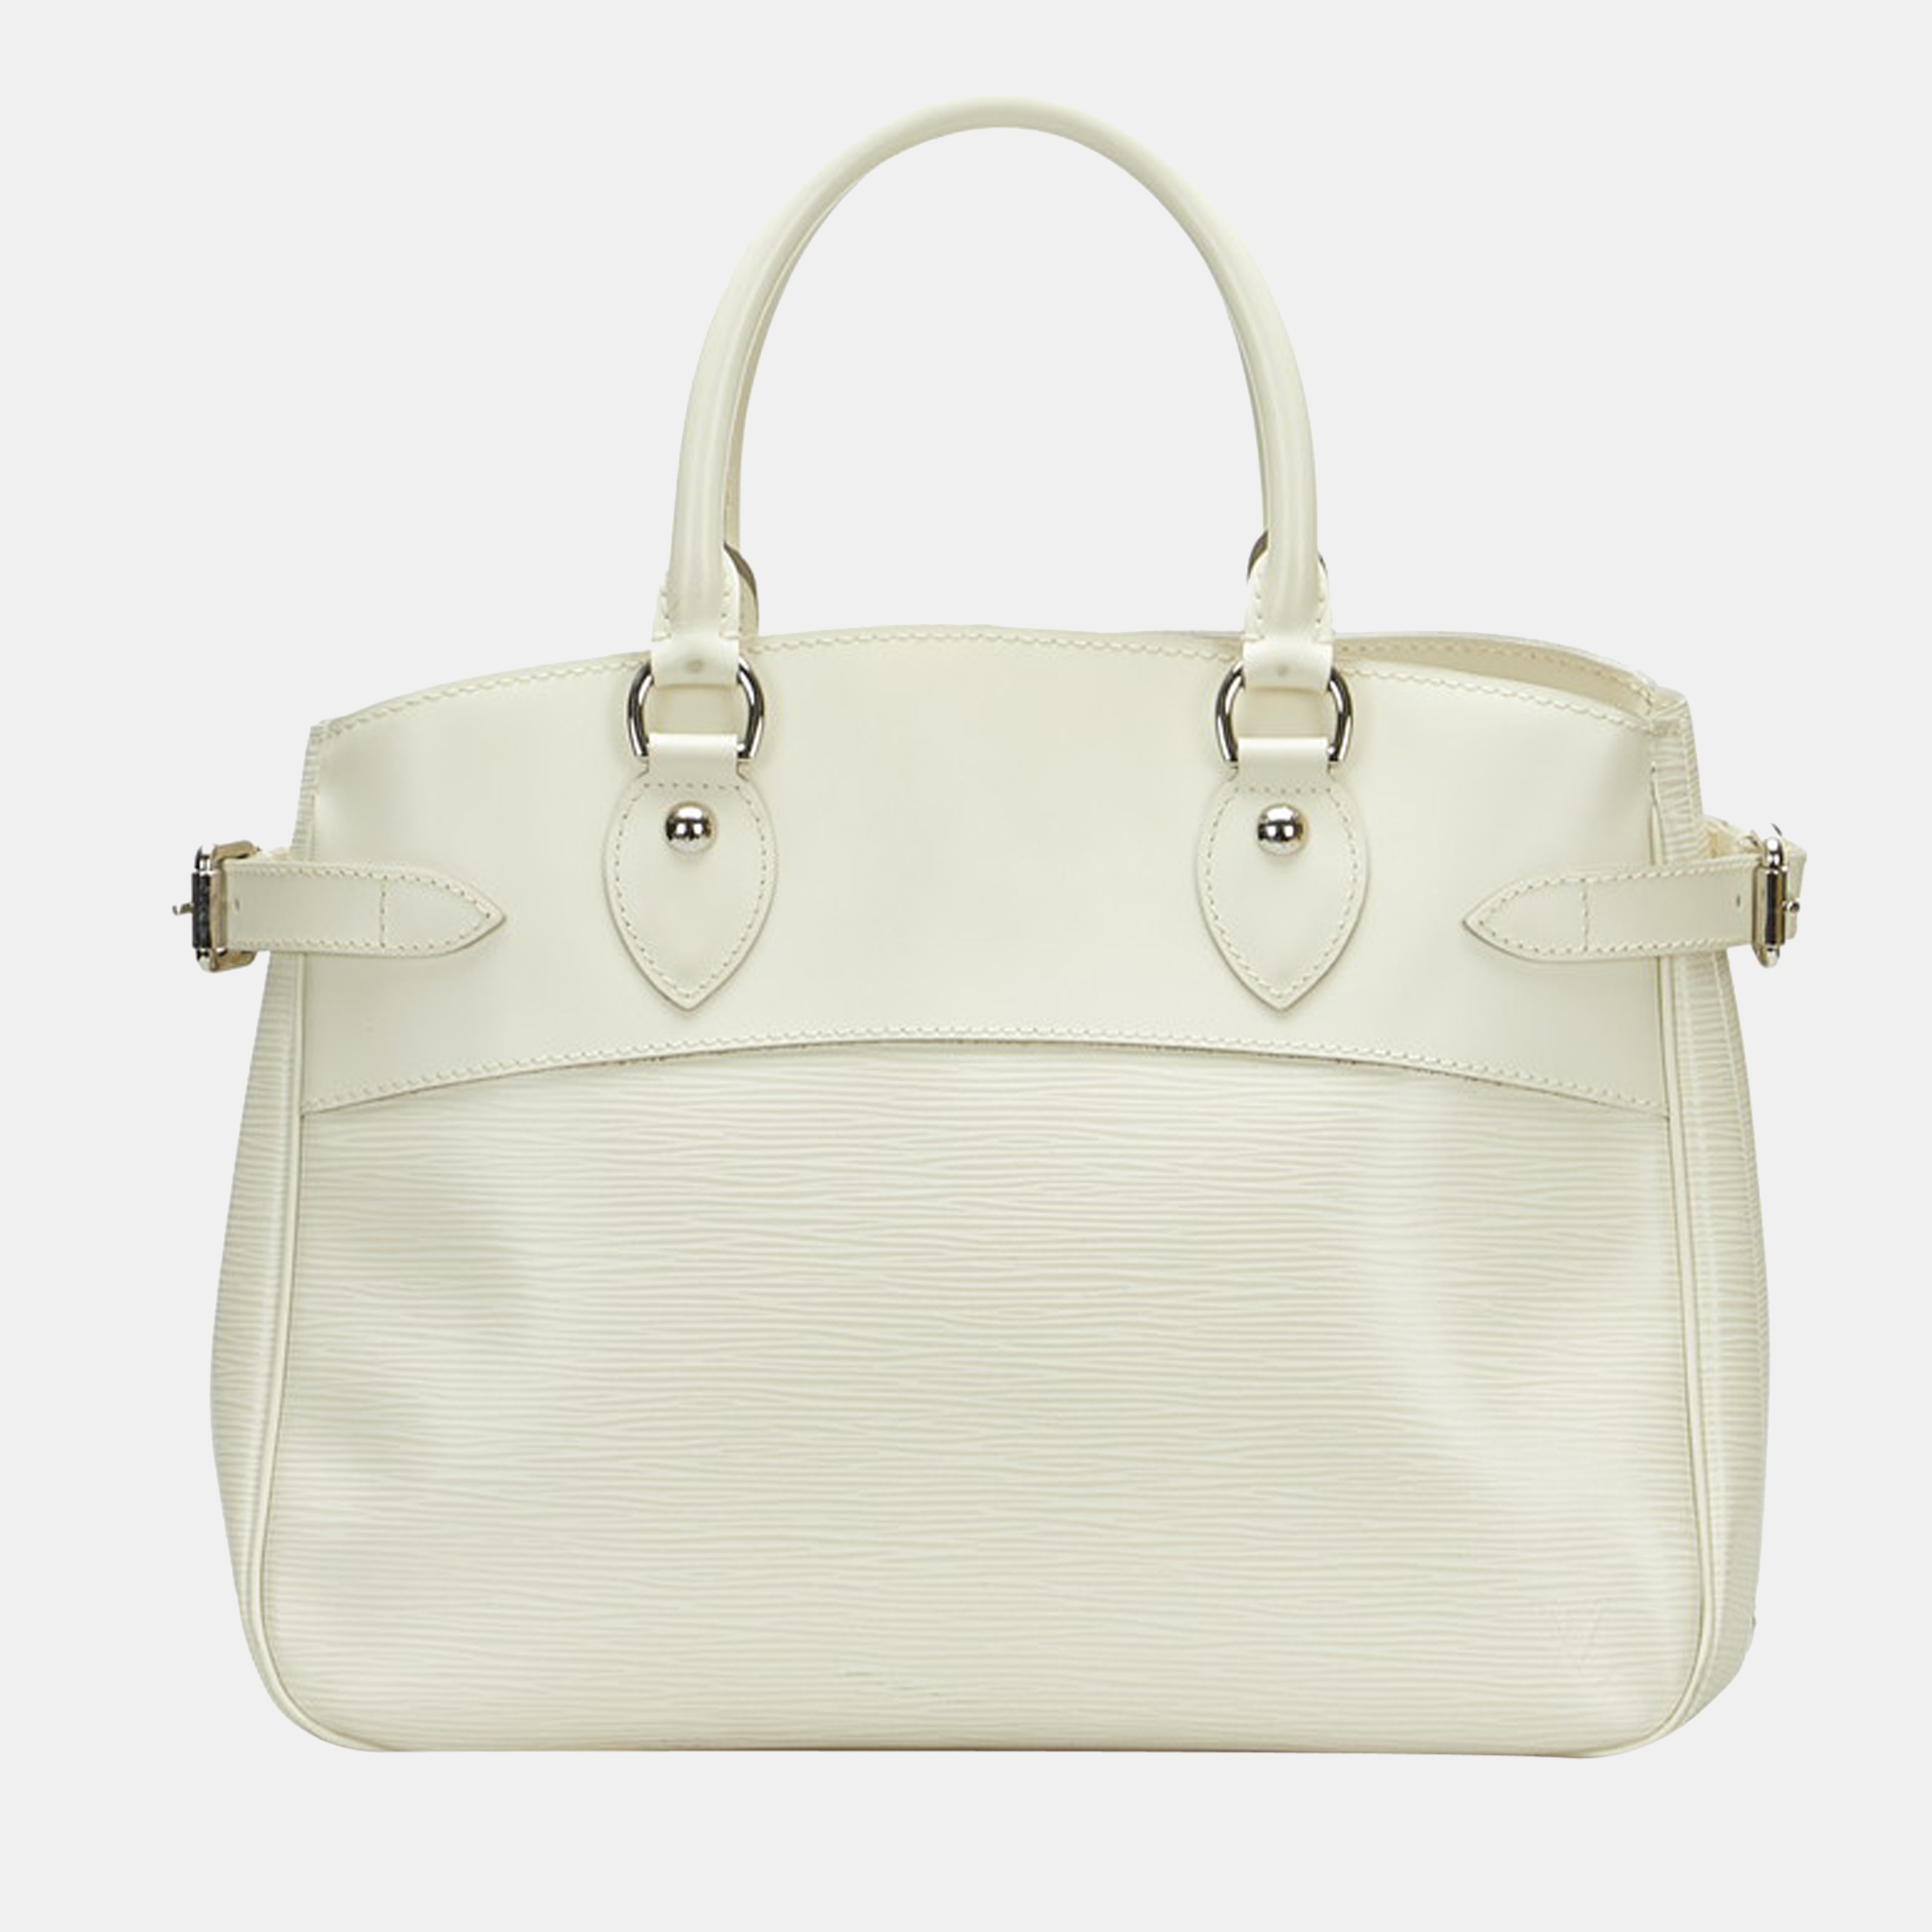 Pre-owned Louis Vuitton White Epi Leather Passy Pm Bag